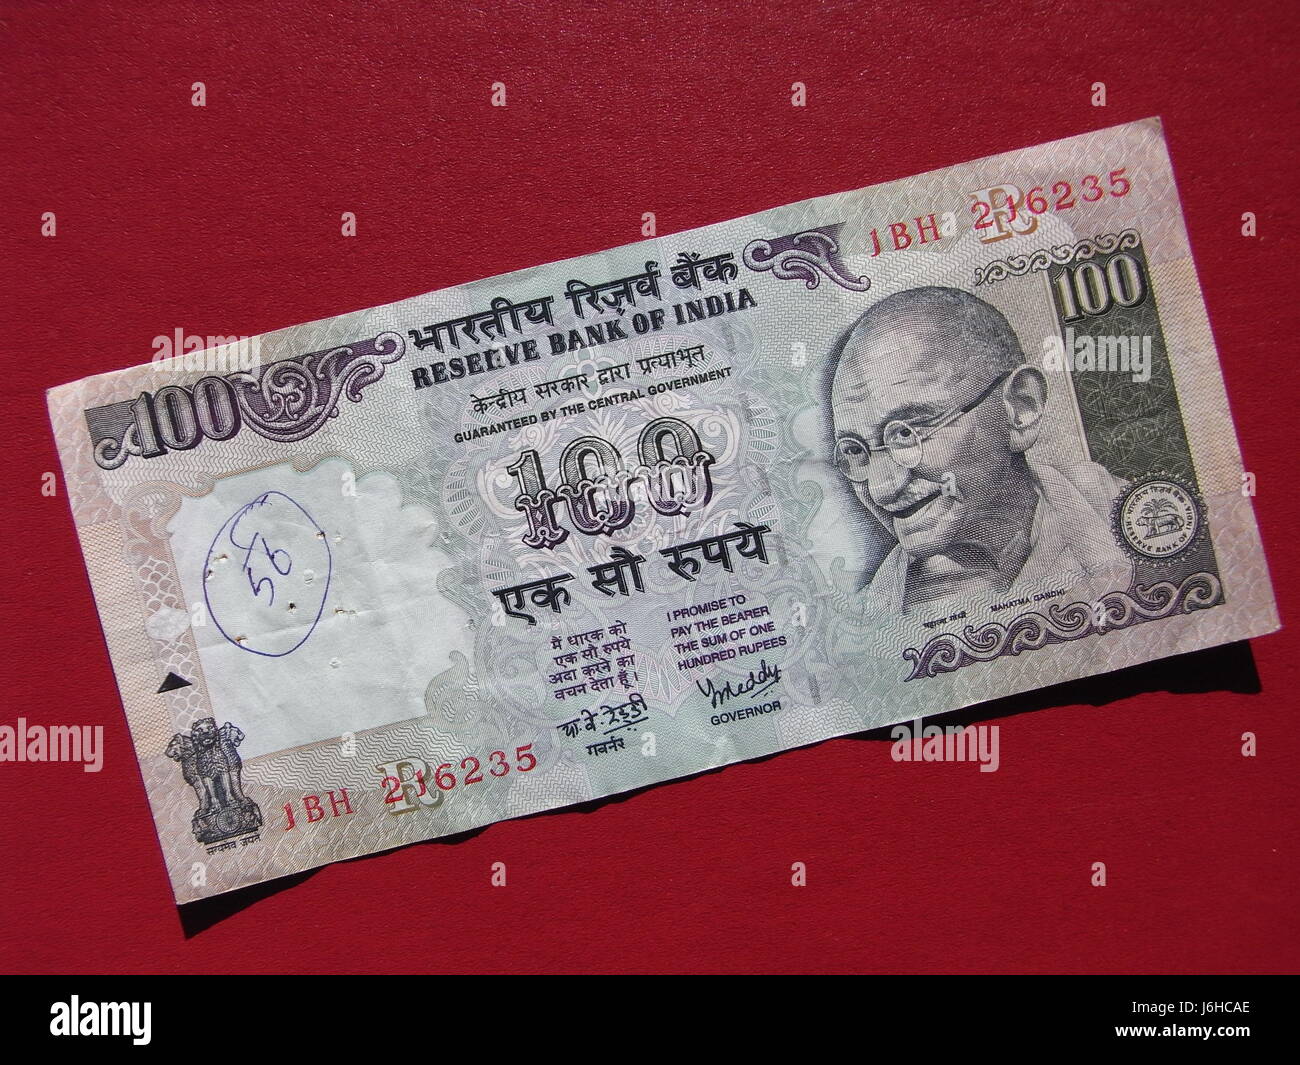 india bank note shine rupee cash cold cash money in cash money detail closeup Stock Photo